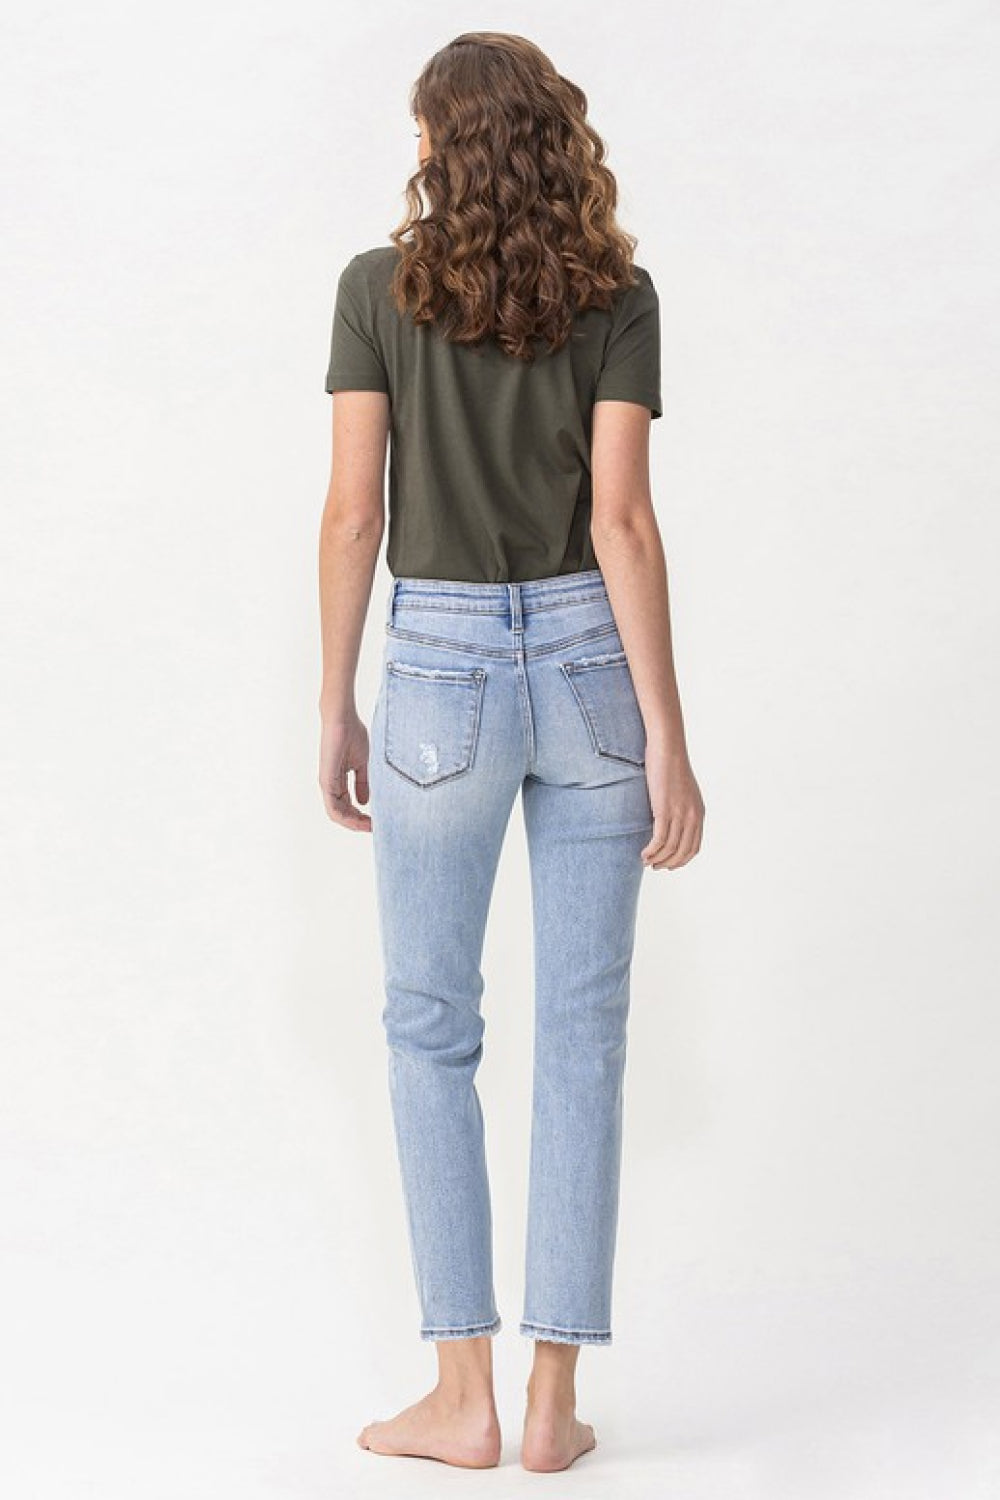 Lovervet Andrea Midrise Crop Straight Jeans - Lola Cerina Boutique